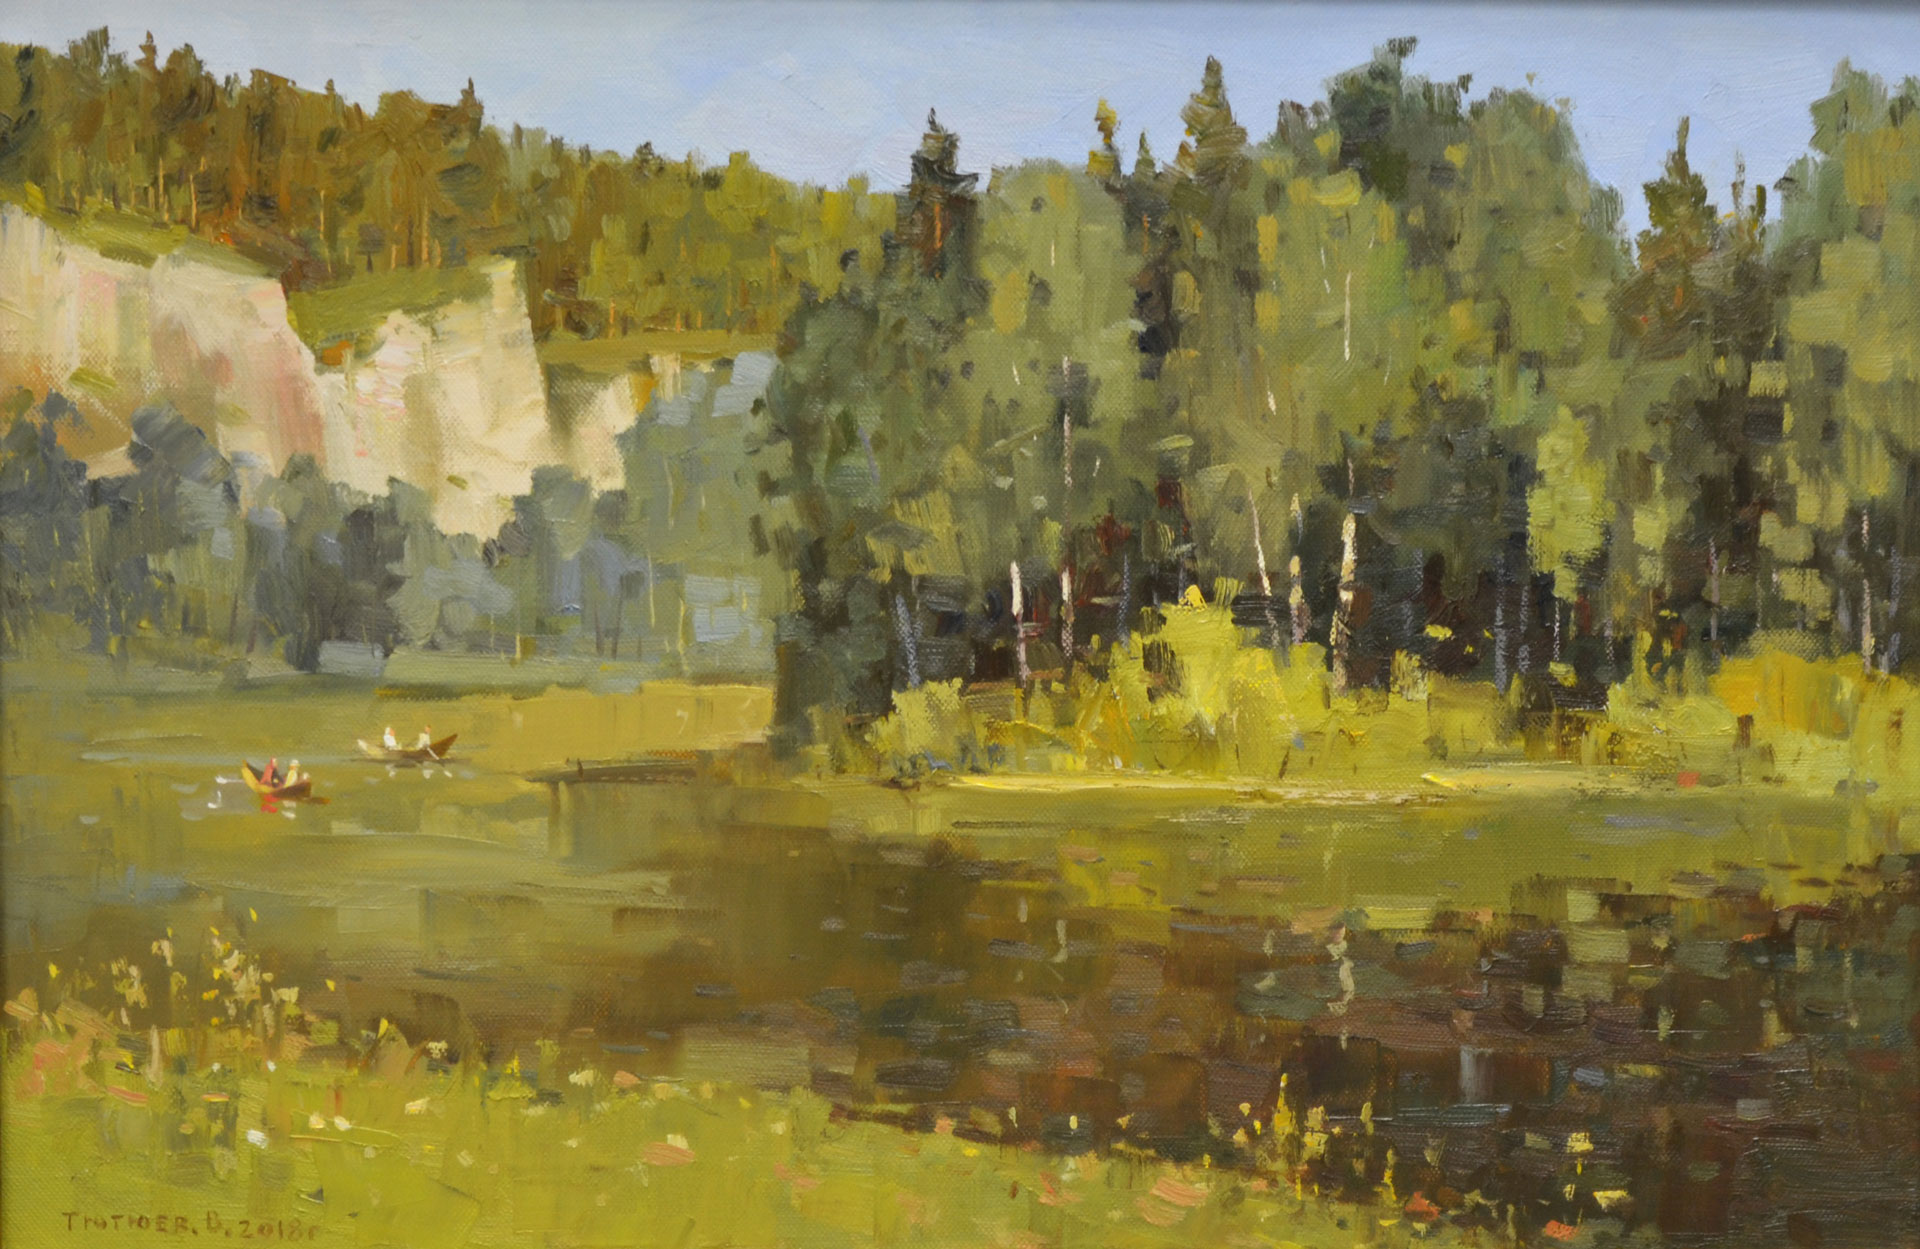 On Chusovaya River, Vladimir Tyutyuev, Buy the painting Oil